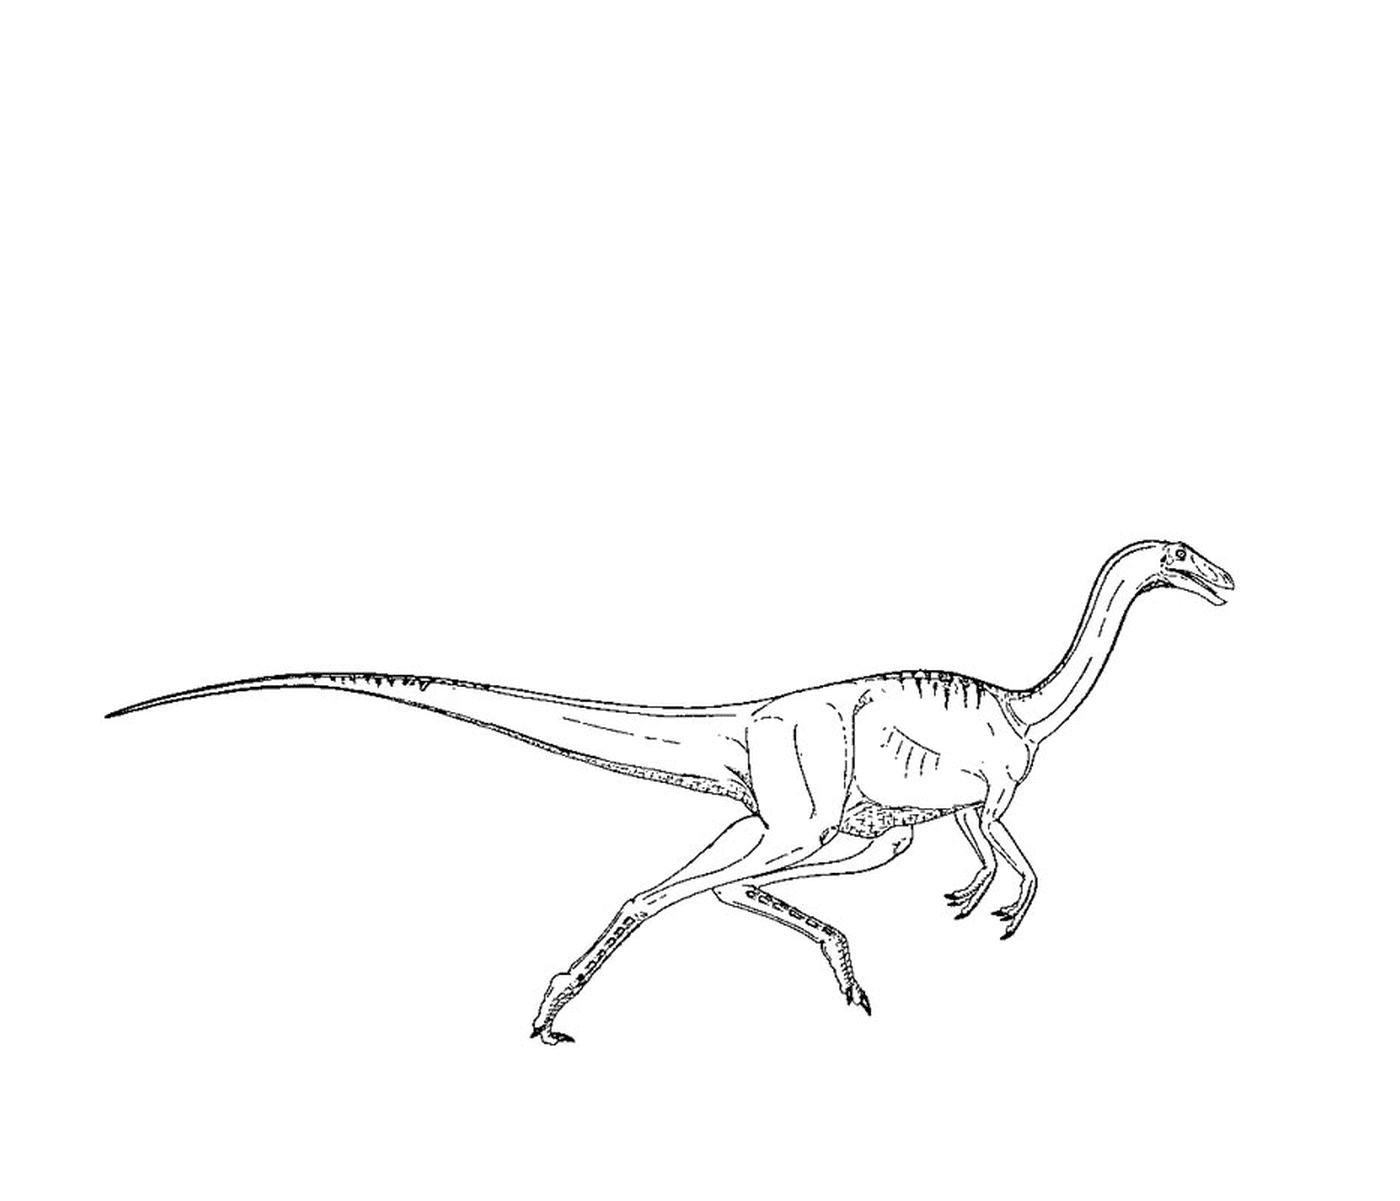  Jurassic Park Dinosaur, stupefacente collo lungo 